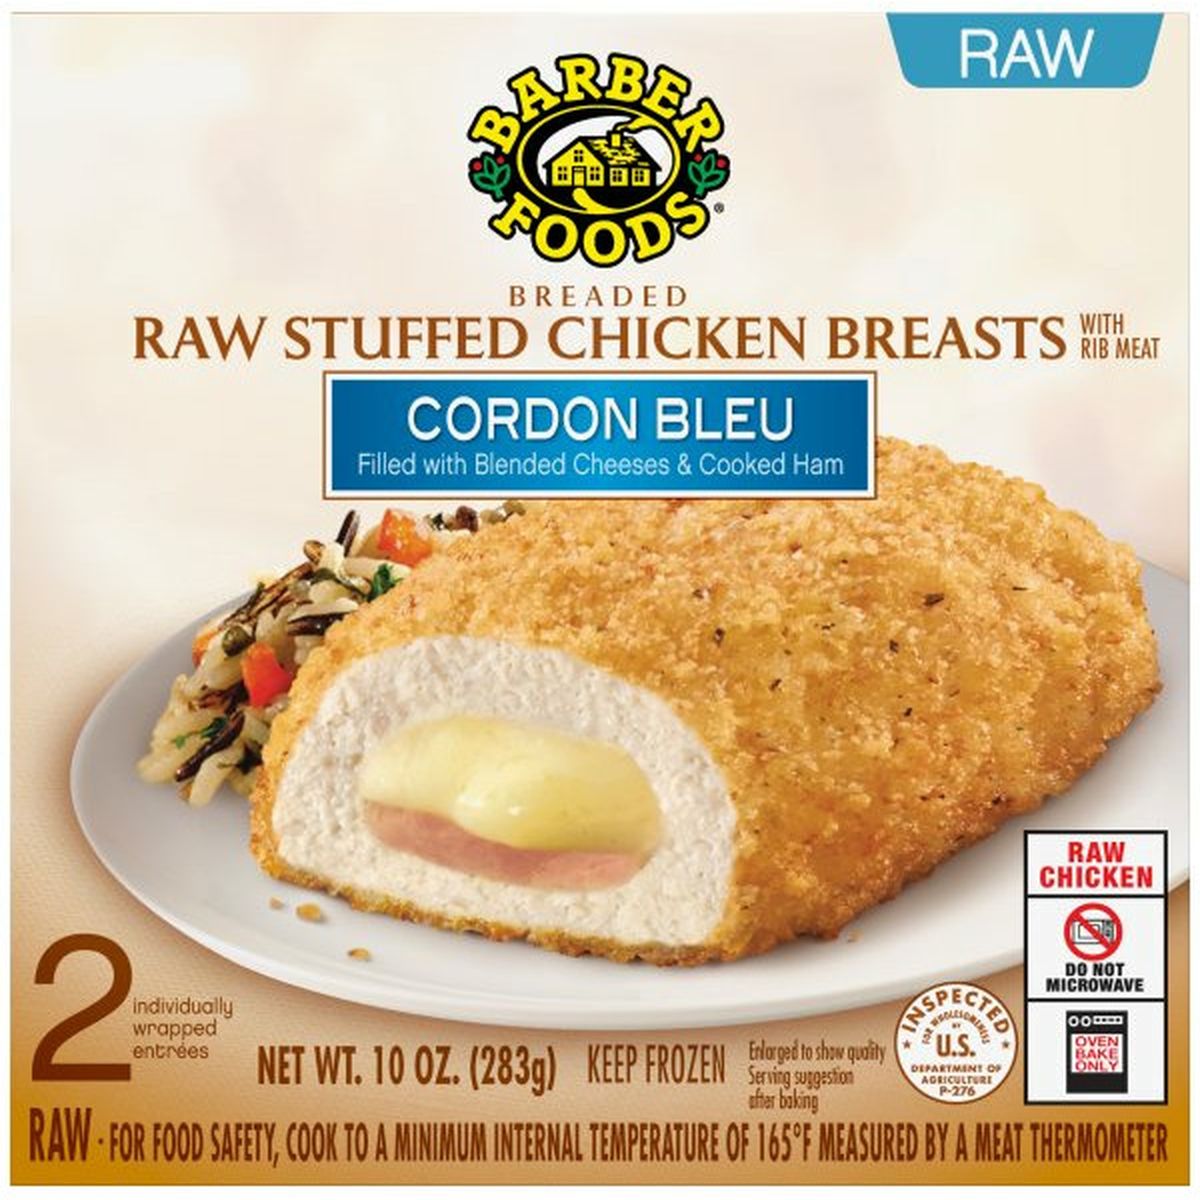 Calories in Barber Foods Stuffed Chicken Breasts Cordon Bleu